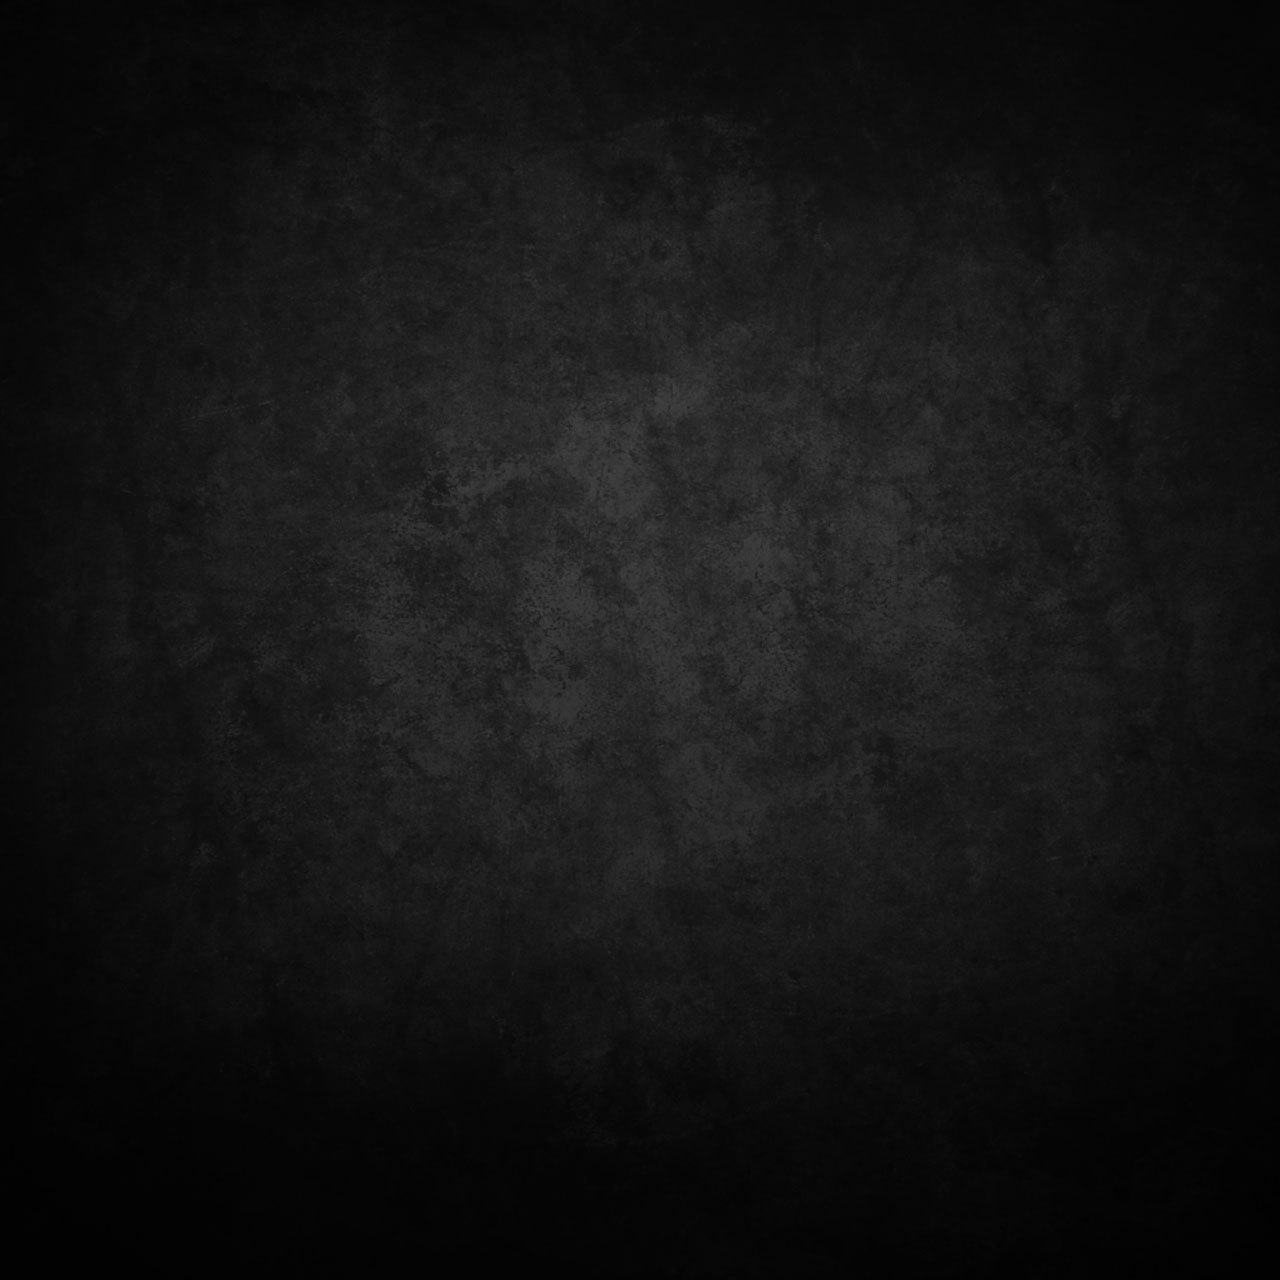 Black Background Textura Negra Bb10 Z10 Q5 Q10 Wallpaper